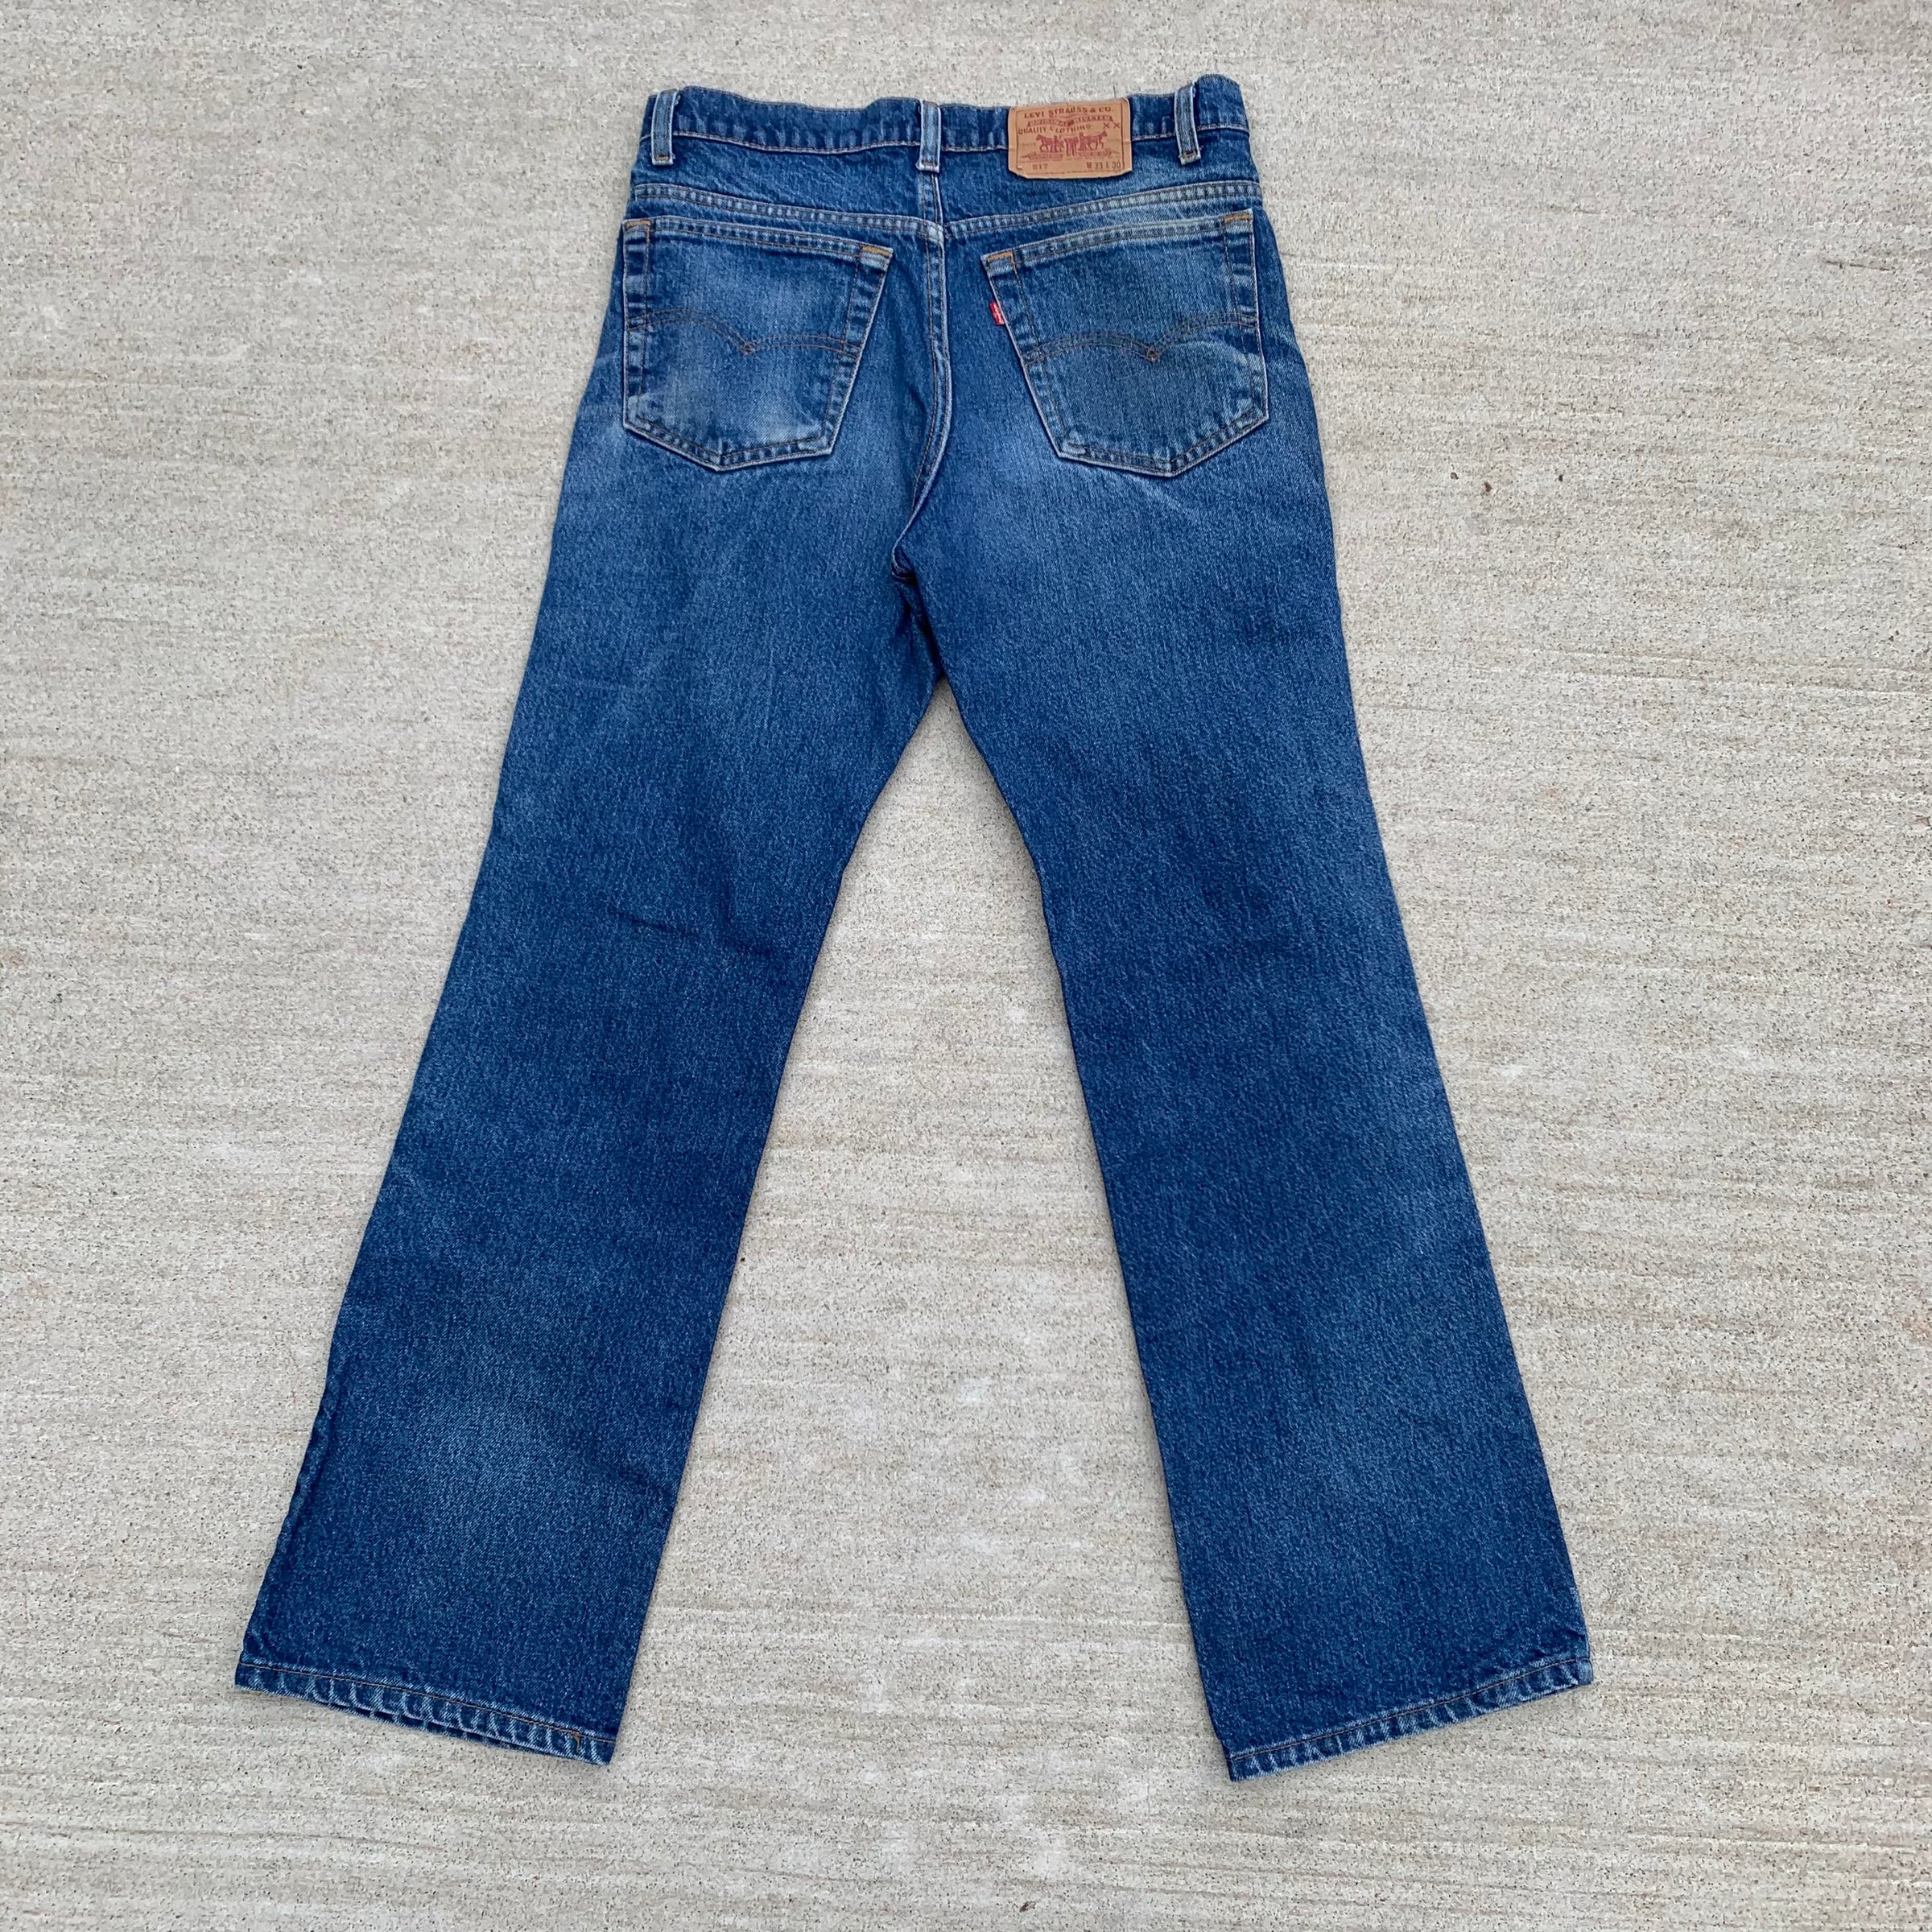 1980's/1990's Levi's 517 Dark Wash Flared Denim Jeans 31" x 29.5"